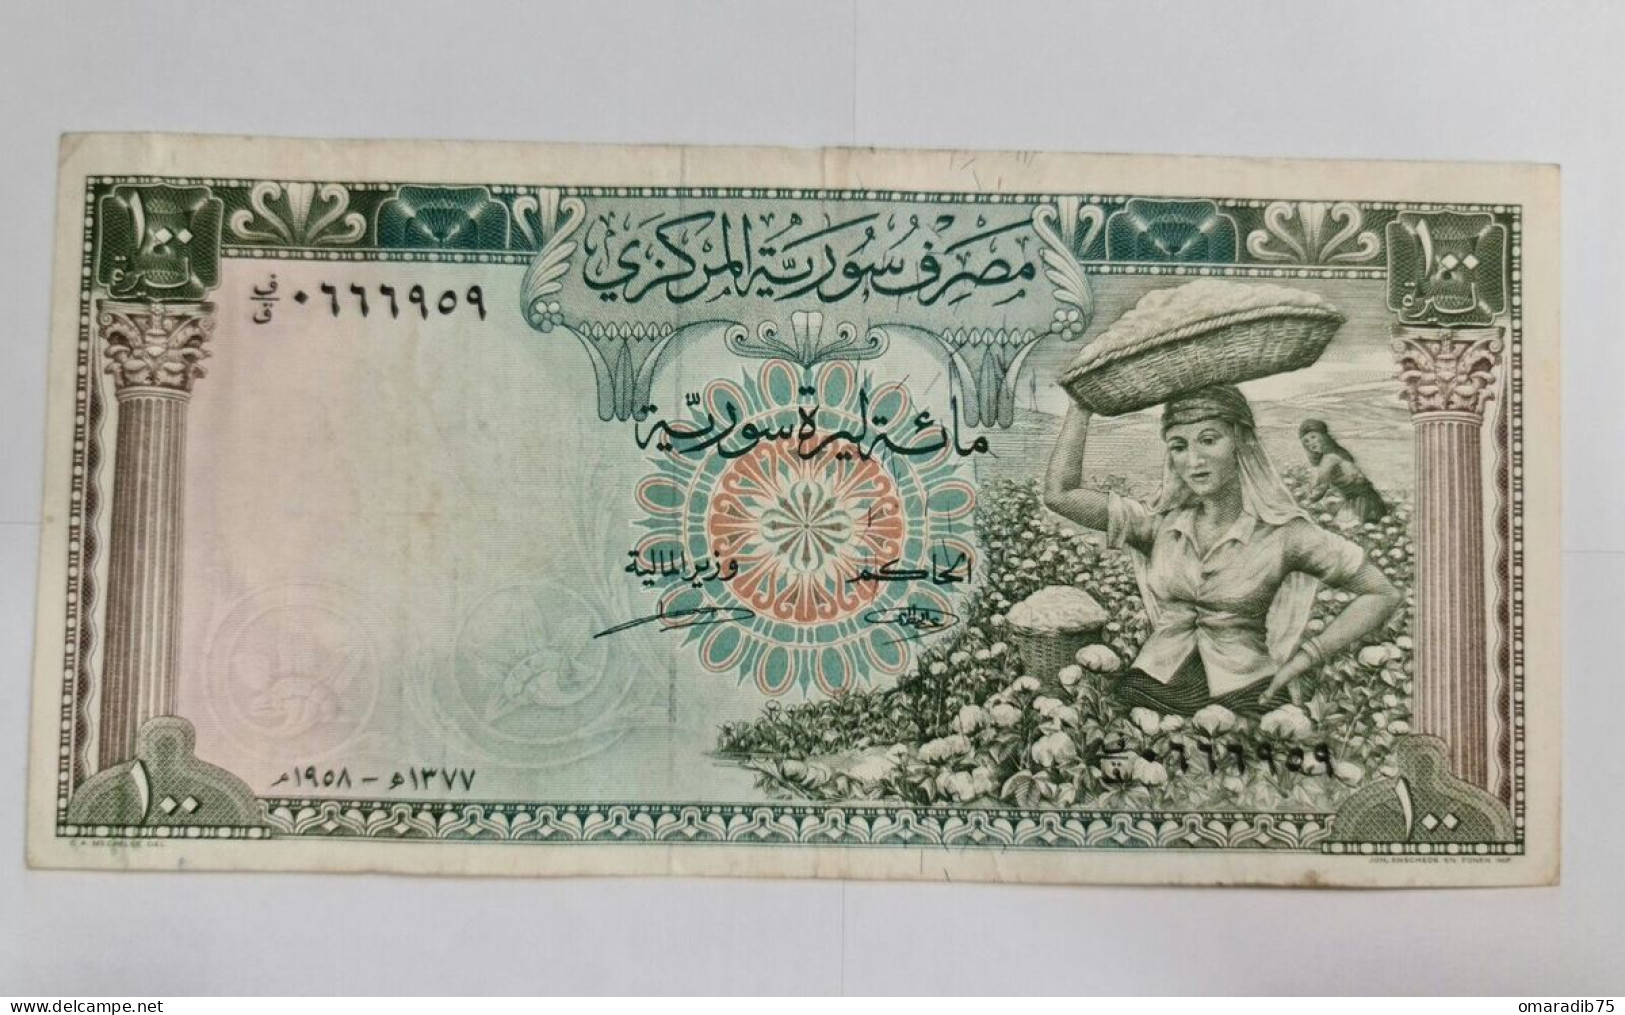 S Y R I E, Billet 100 LIVRES 1958 - Syrien